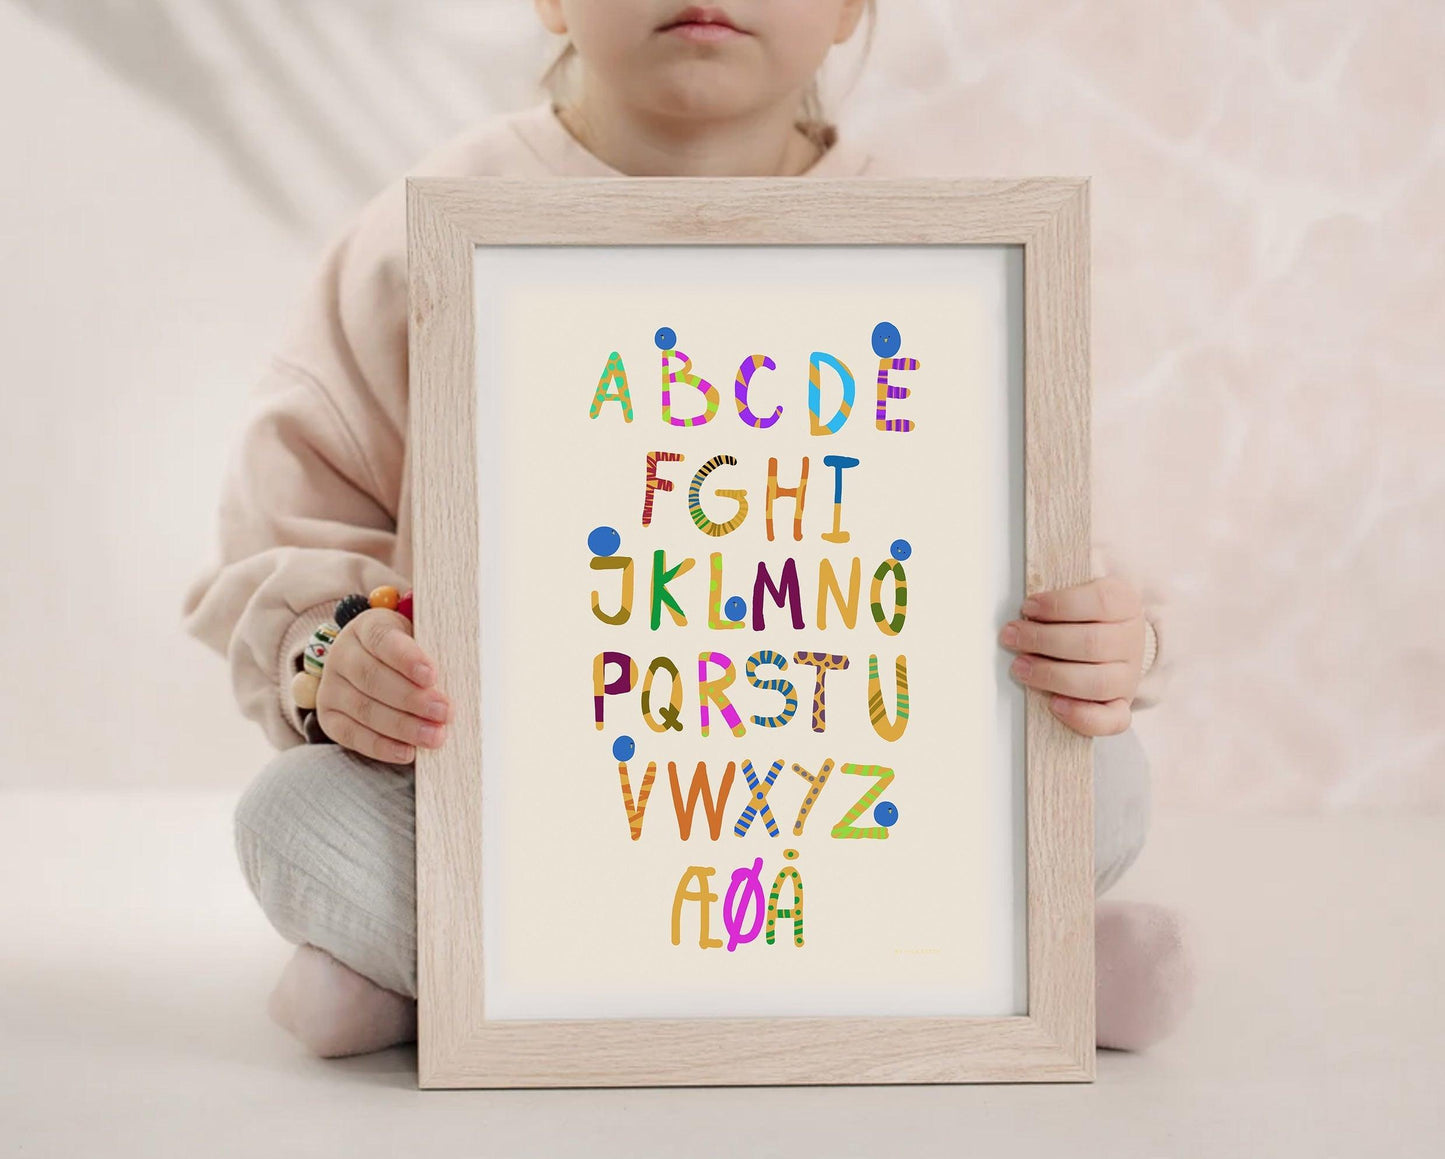 Fun Alphabet Poster - Danish | HiPosterShop